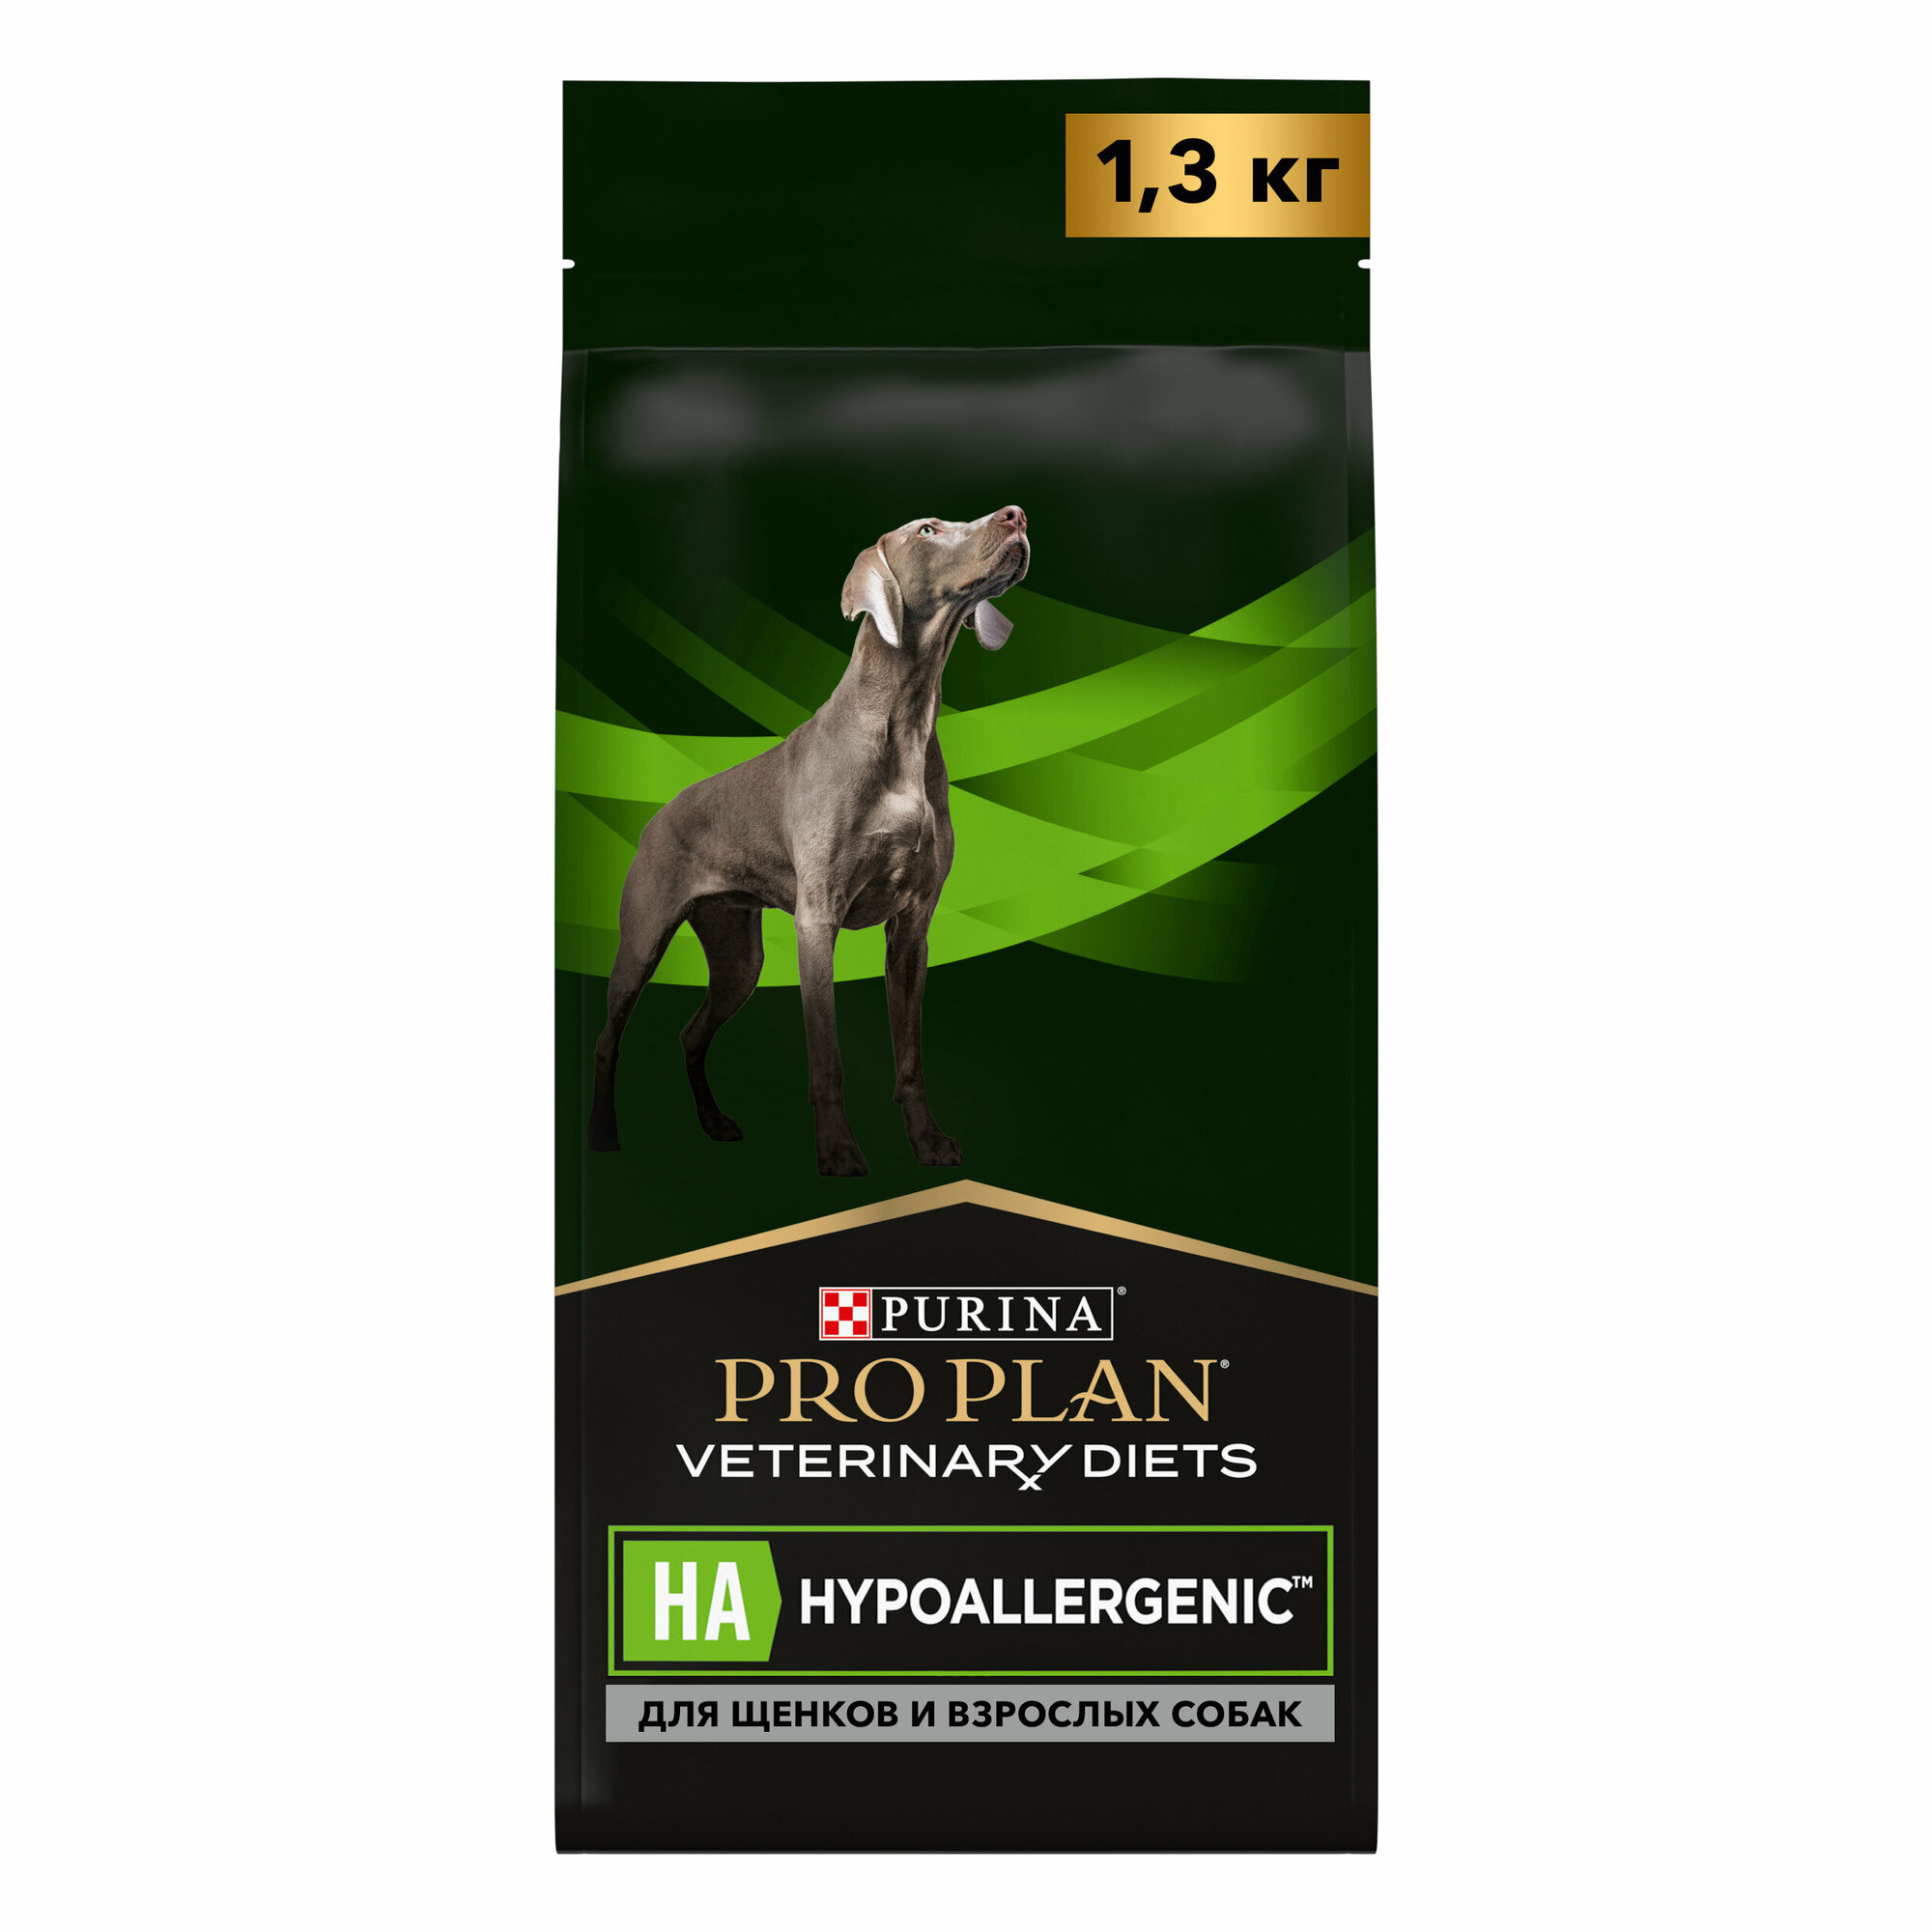 Pro Plan Veterinary Diets HA Hypoallergenic корм для собак профилактика аллергии (Диетический, 1,3 кг.) Purina Pro Plan Veterinary Diets - фото №16